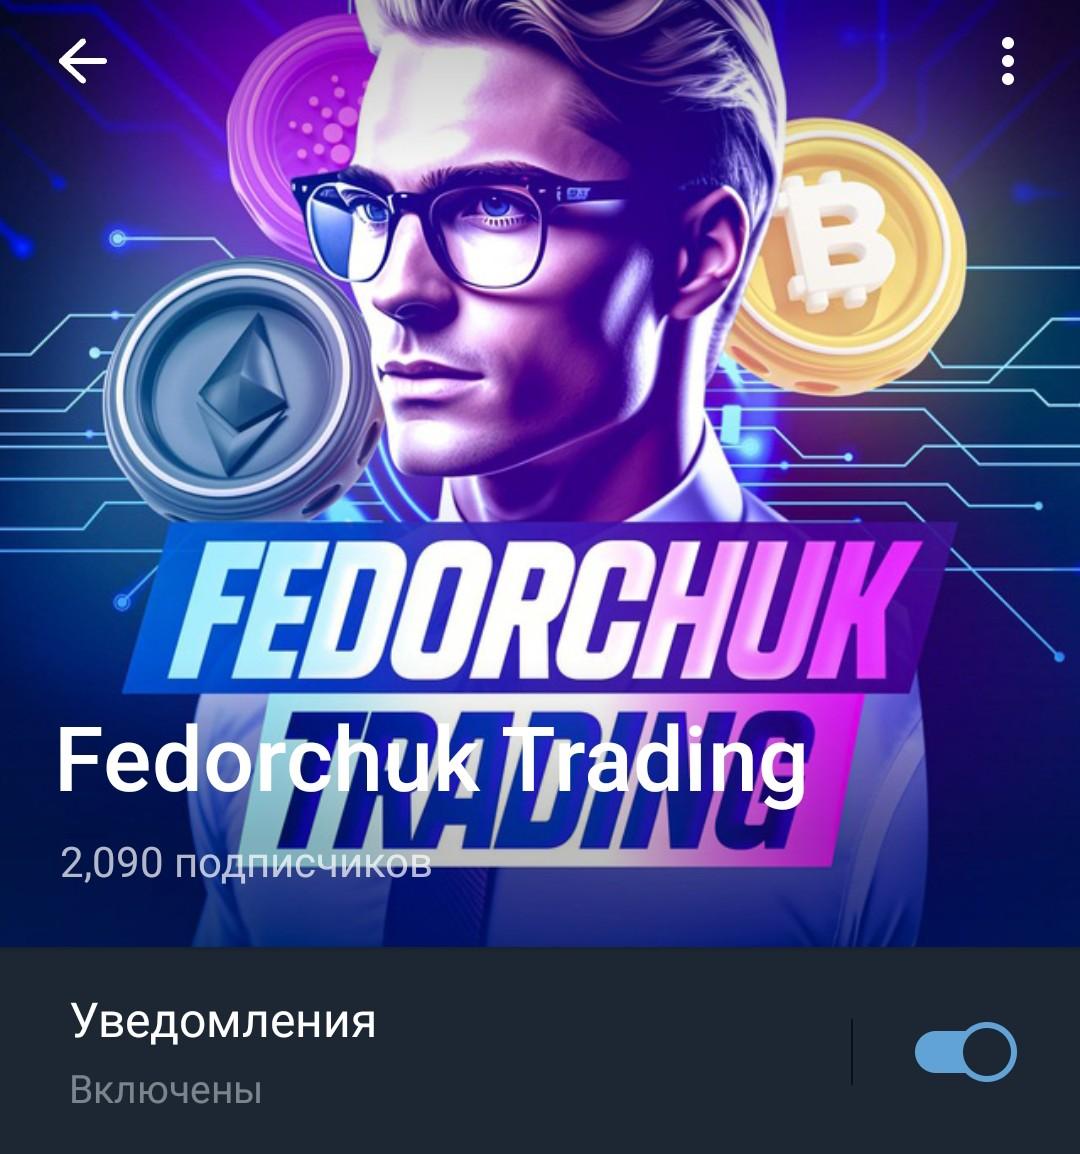 fedorchuk trading телега